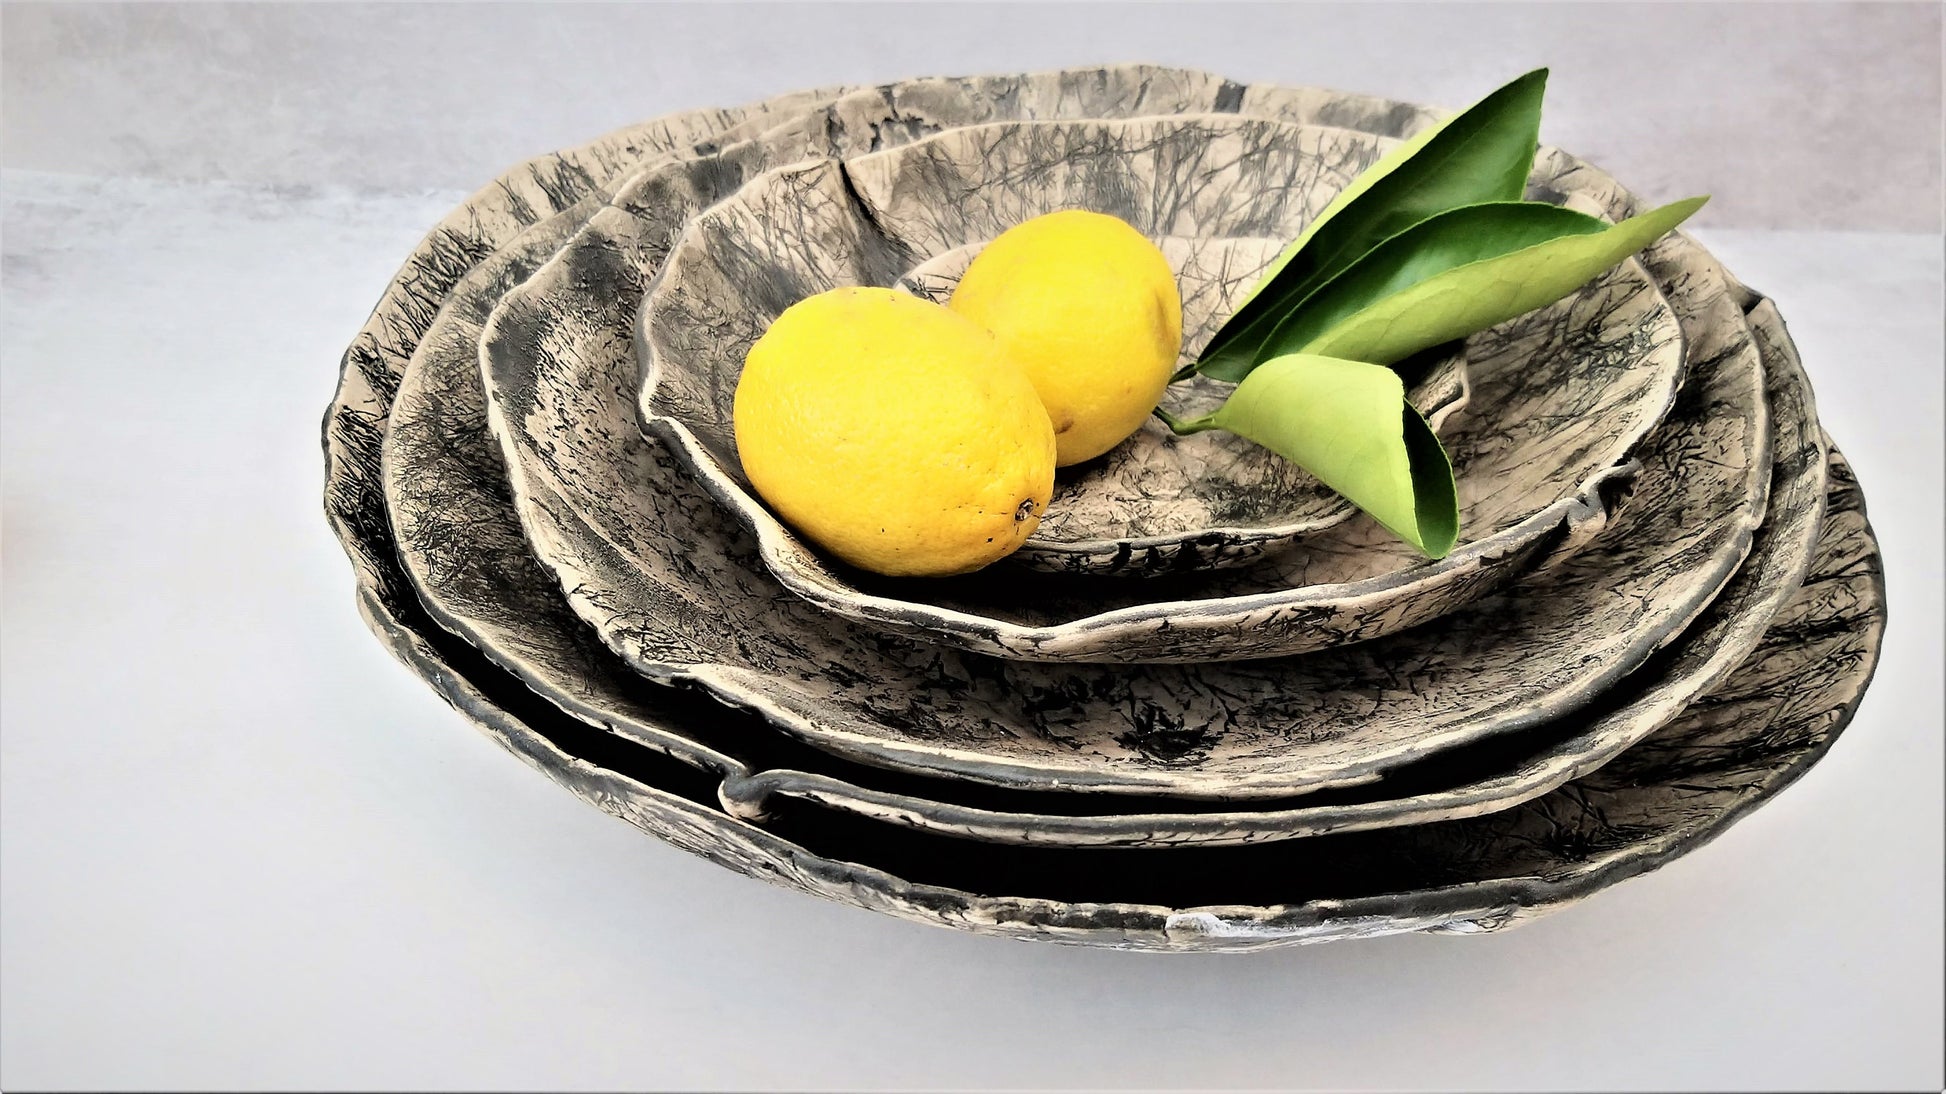 Domingo Fruit Bowl - Large Black Clay Fruit Holder – Modern